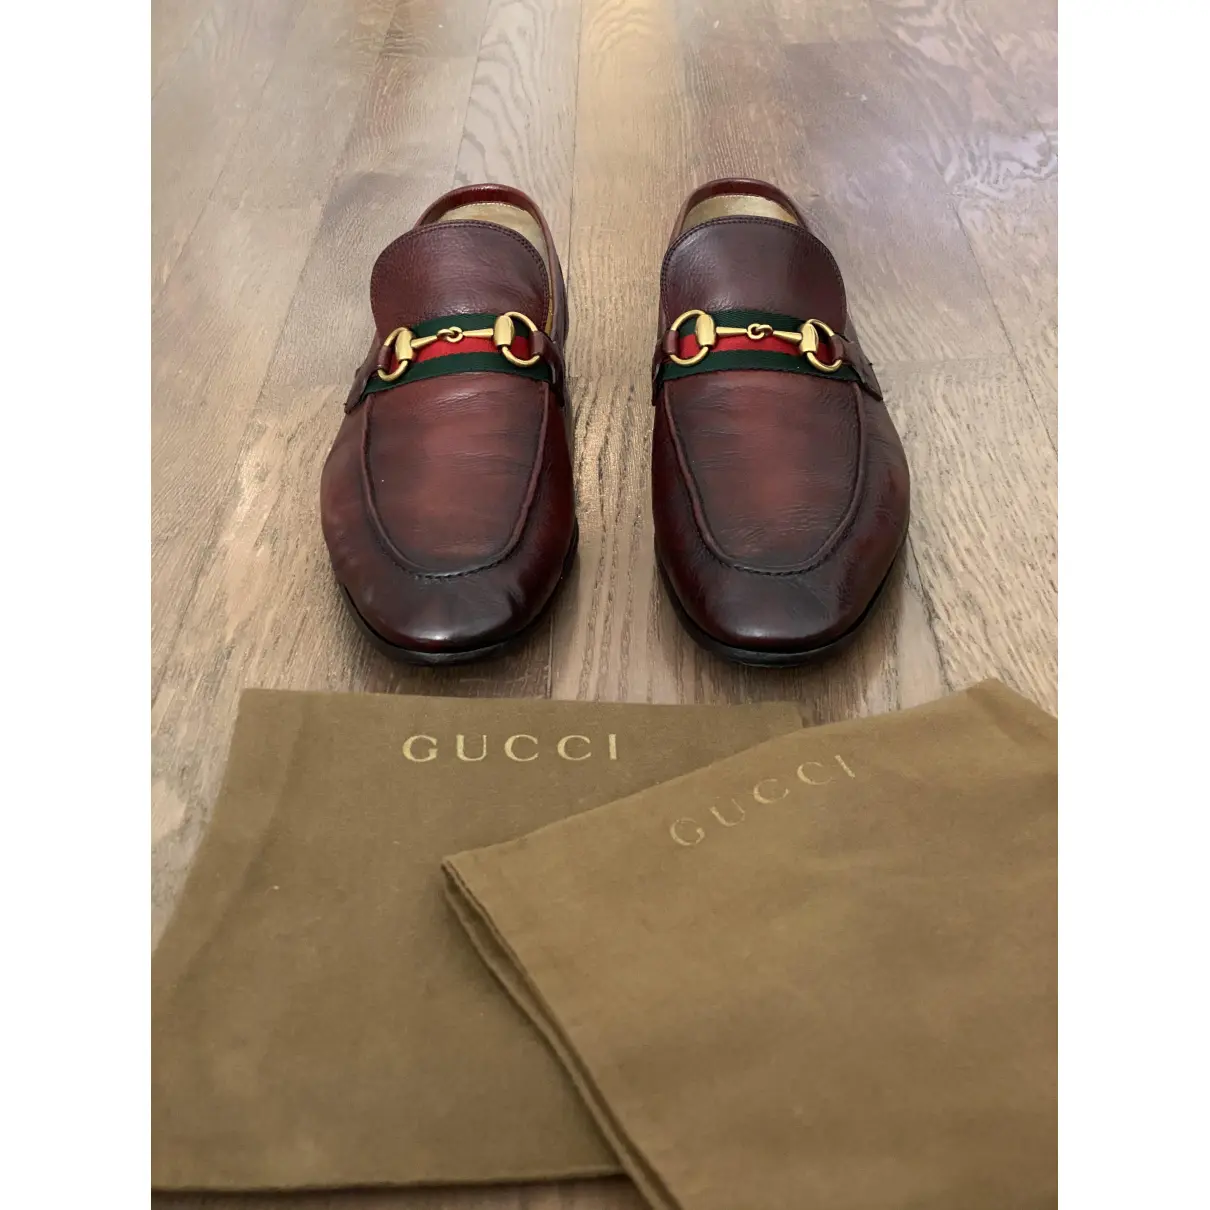 Buy Gucci Jordaan leather flats online